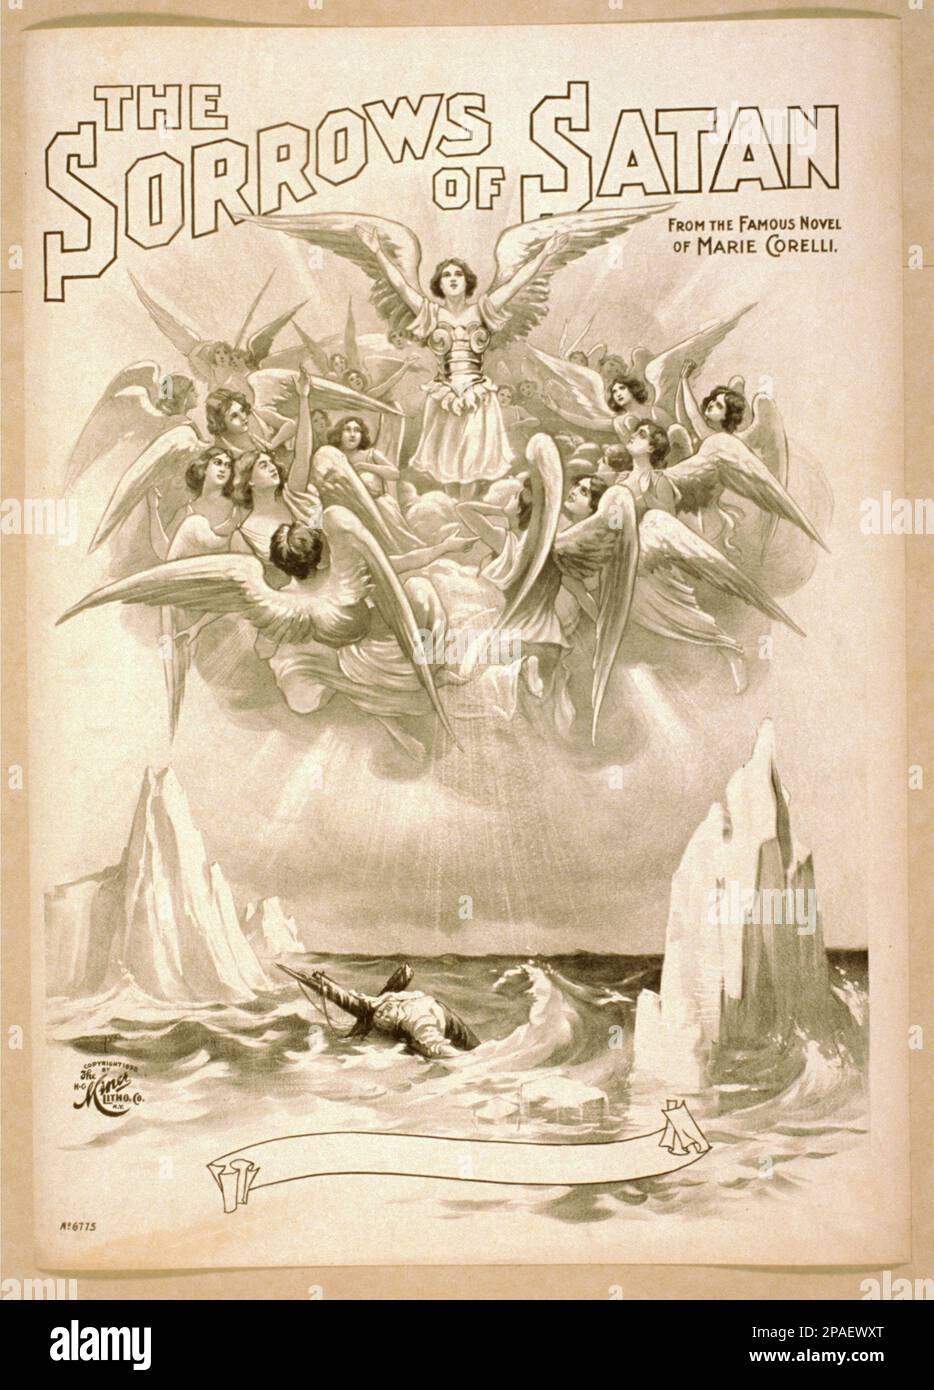 1900 ca , USA : The SORROW OF SATAN , a theater play from a novel by woman writer MARIE CORELLI ( 1855 - 1924 ).  -  TEATRO - THEATRE - THEATER - locandina - poster advertising - pubblicita' - SCRITTRICE - SCRITTORE - LETTERATURA - LITERATURE - letterato - triller - pulp fiction - HORROR - orrore  - GOTICO - GOTHIC  - BELLE EPOQUE - angels - angelo - angeli - naufragio  ----     GBB Stock Photo